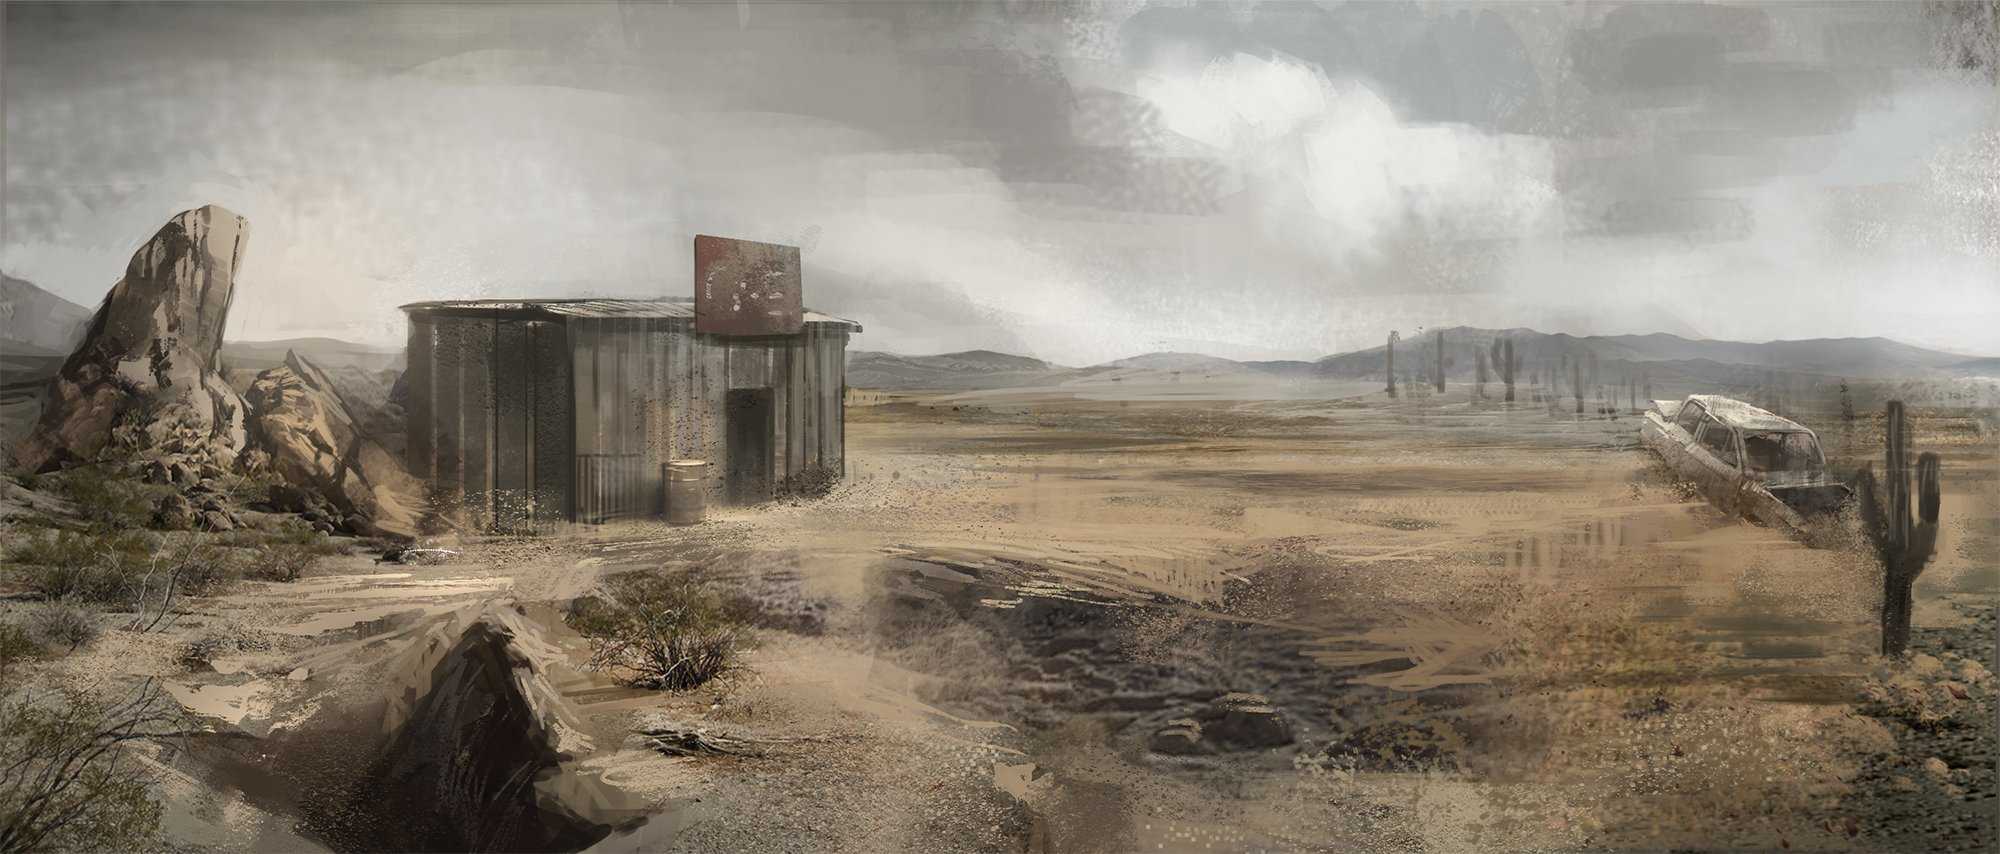 Dead wasteland fallout 4 фото 10